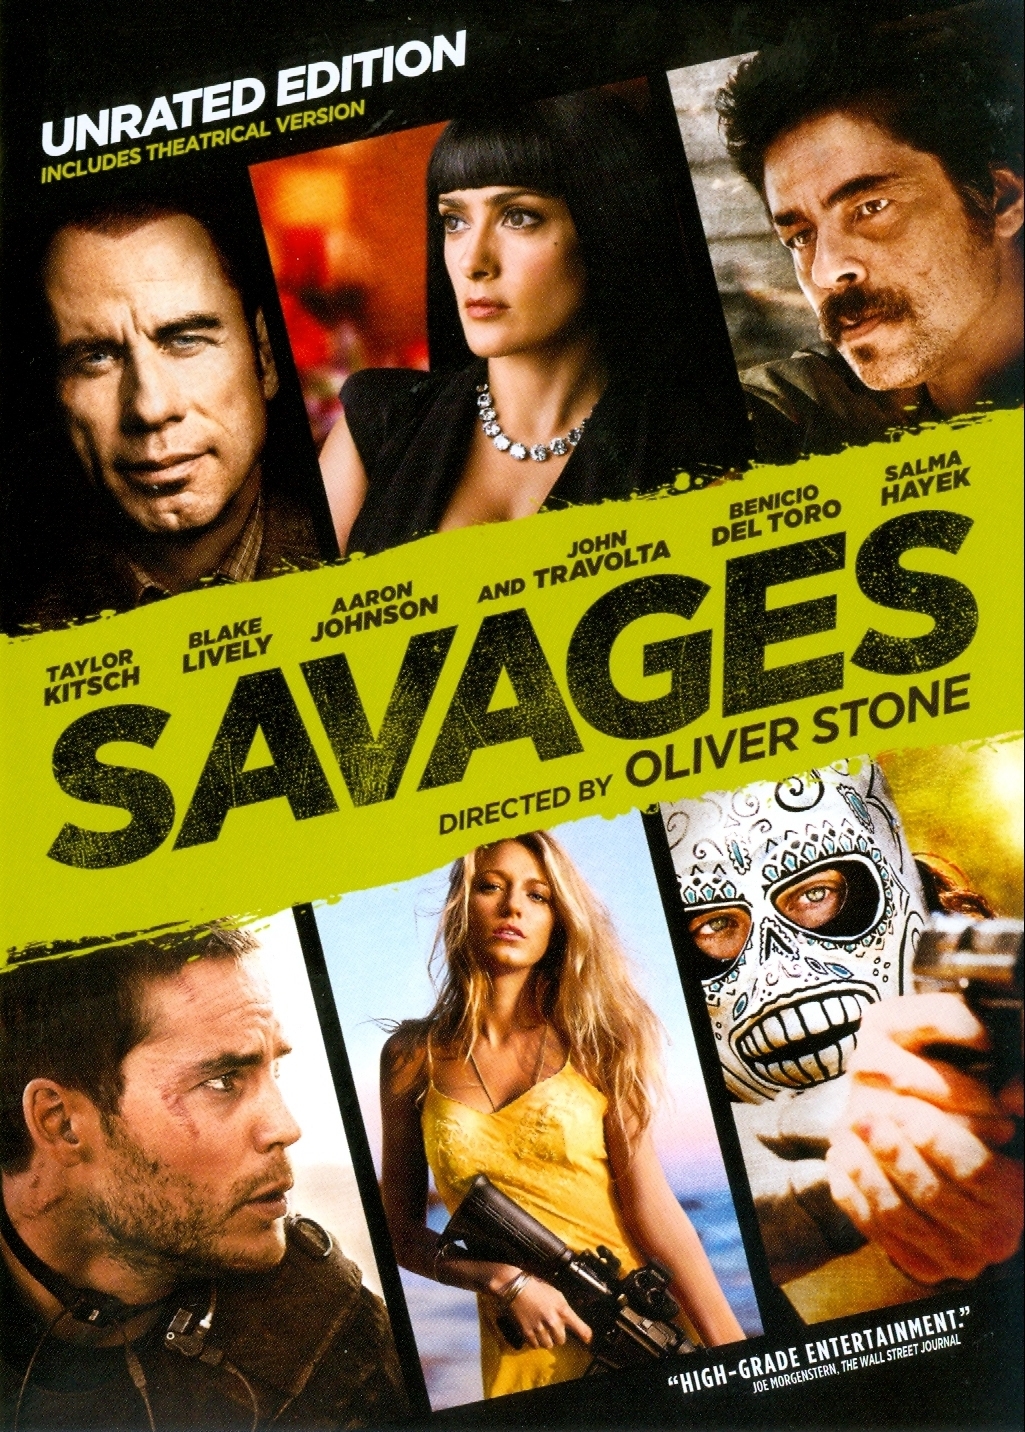 Taylor Kitsch در صحنه فیلم سینمایی Savages: The Interrogations به همراه آرون تیلور جانسون، بنیسیو دل تورو، بلیک لیولی، جان تراولتا و Salma Hayek